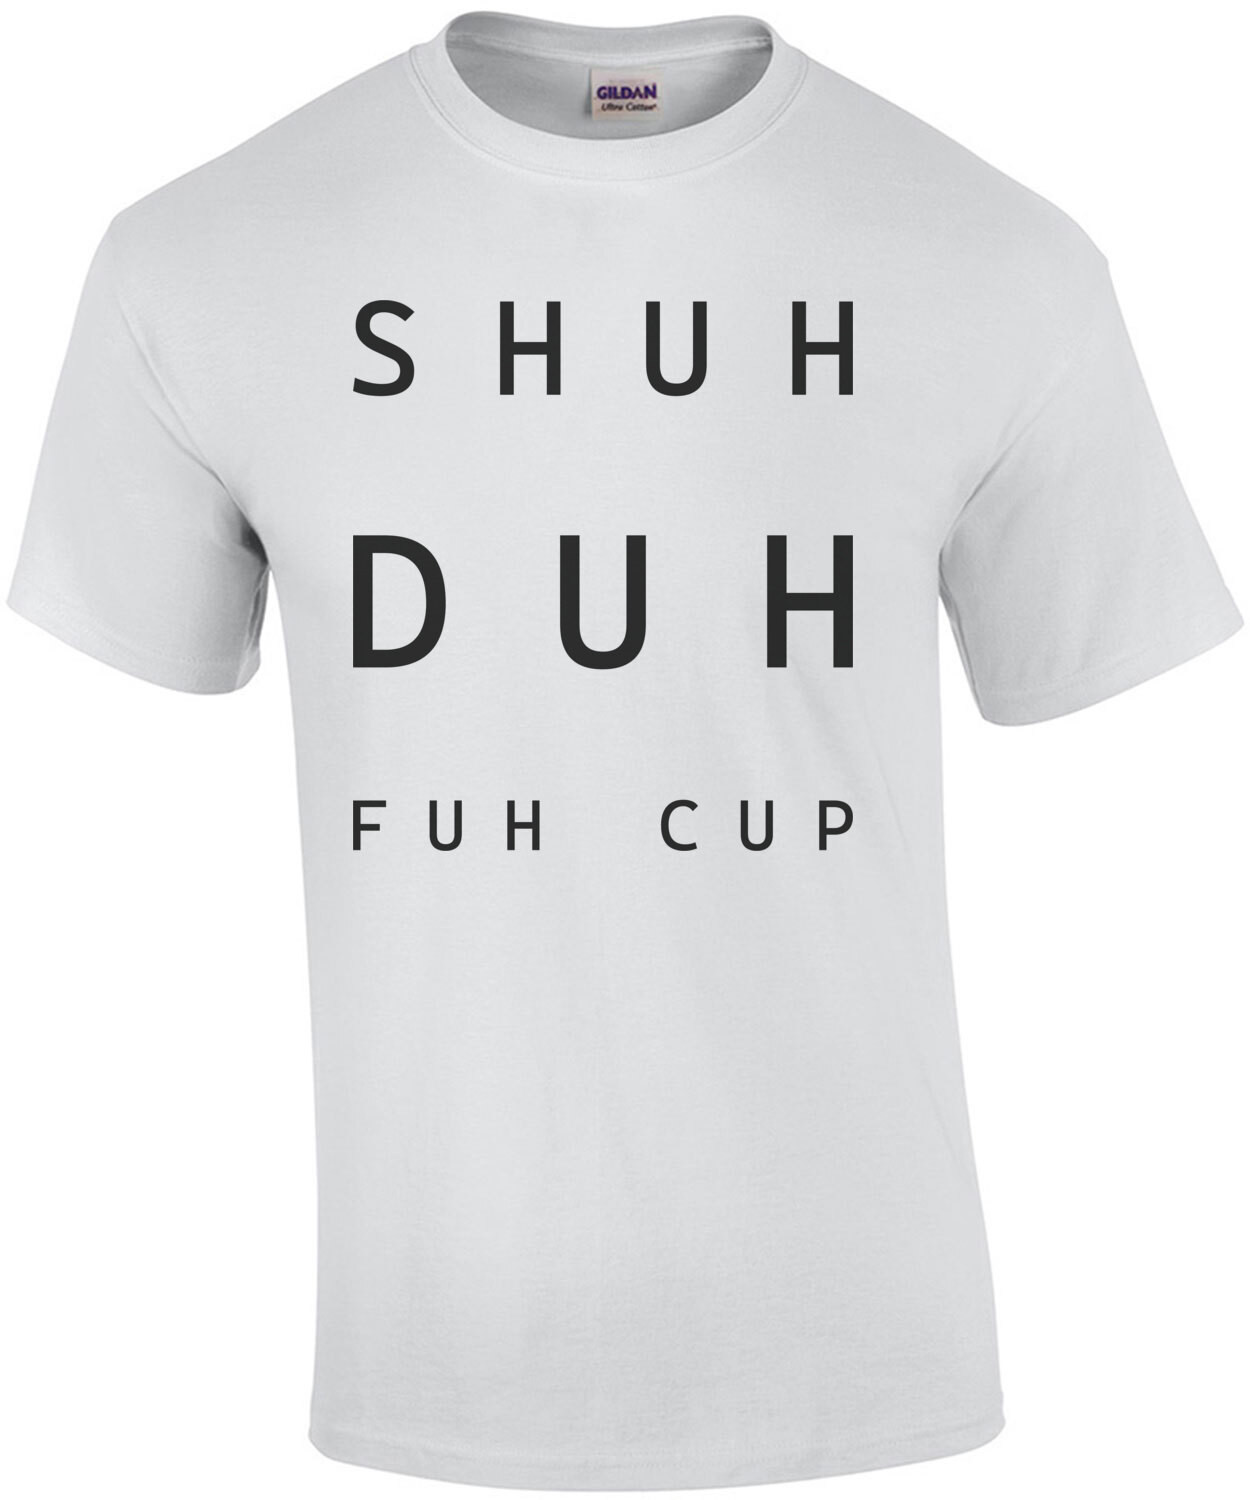 Shuh Duh Fuh Cup - Funny T-Shirt